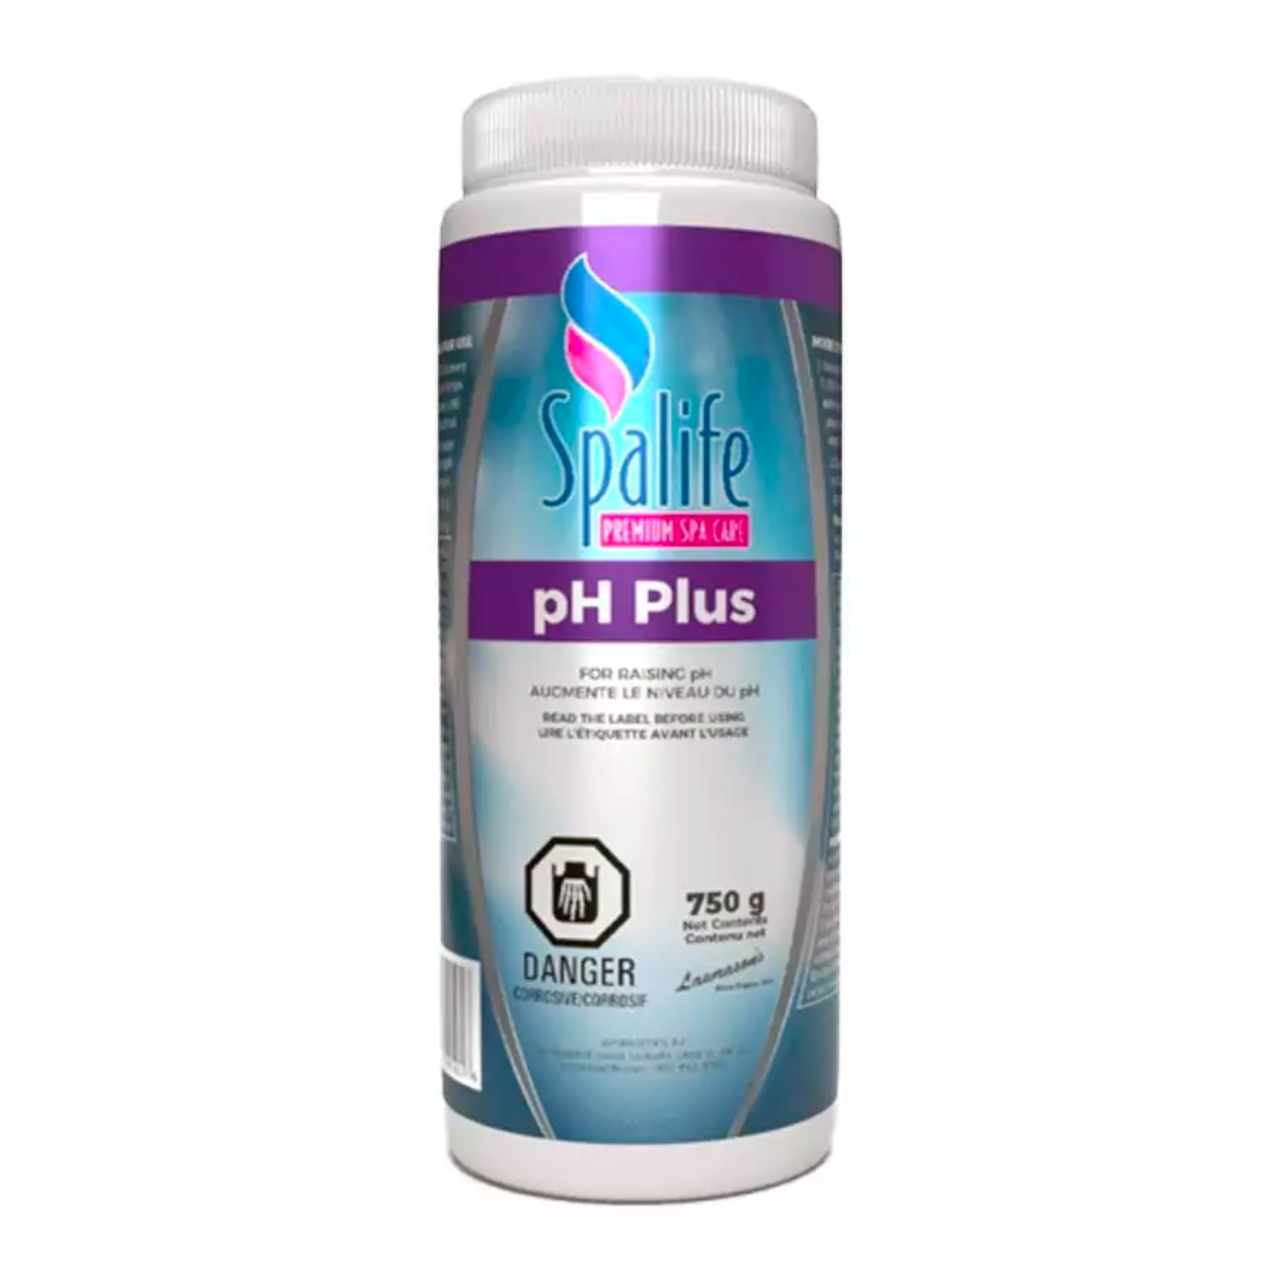 Spa Life pH Plus - For Raising pH